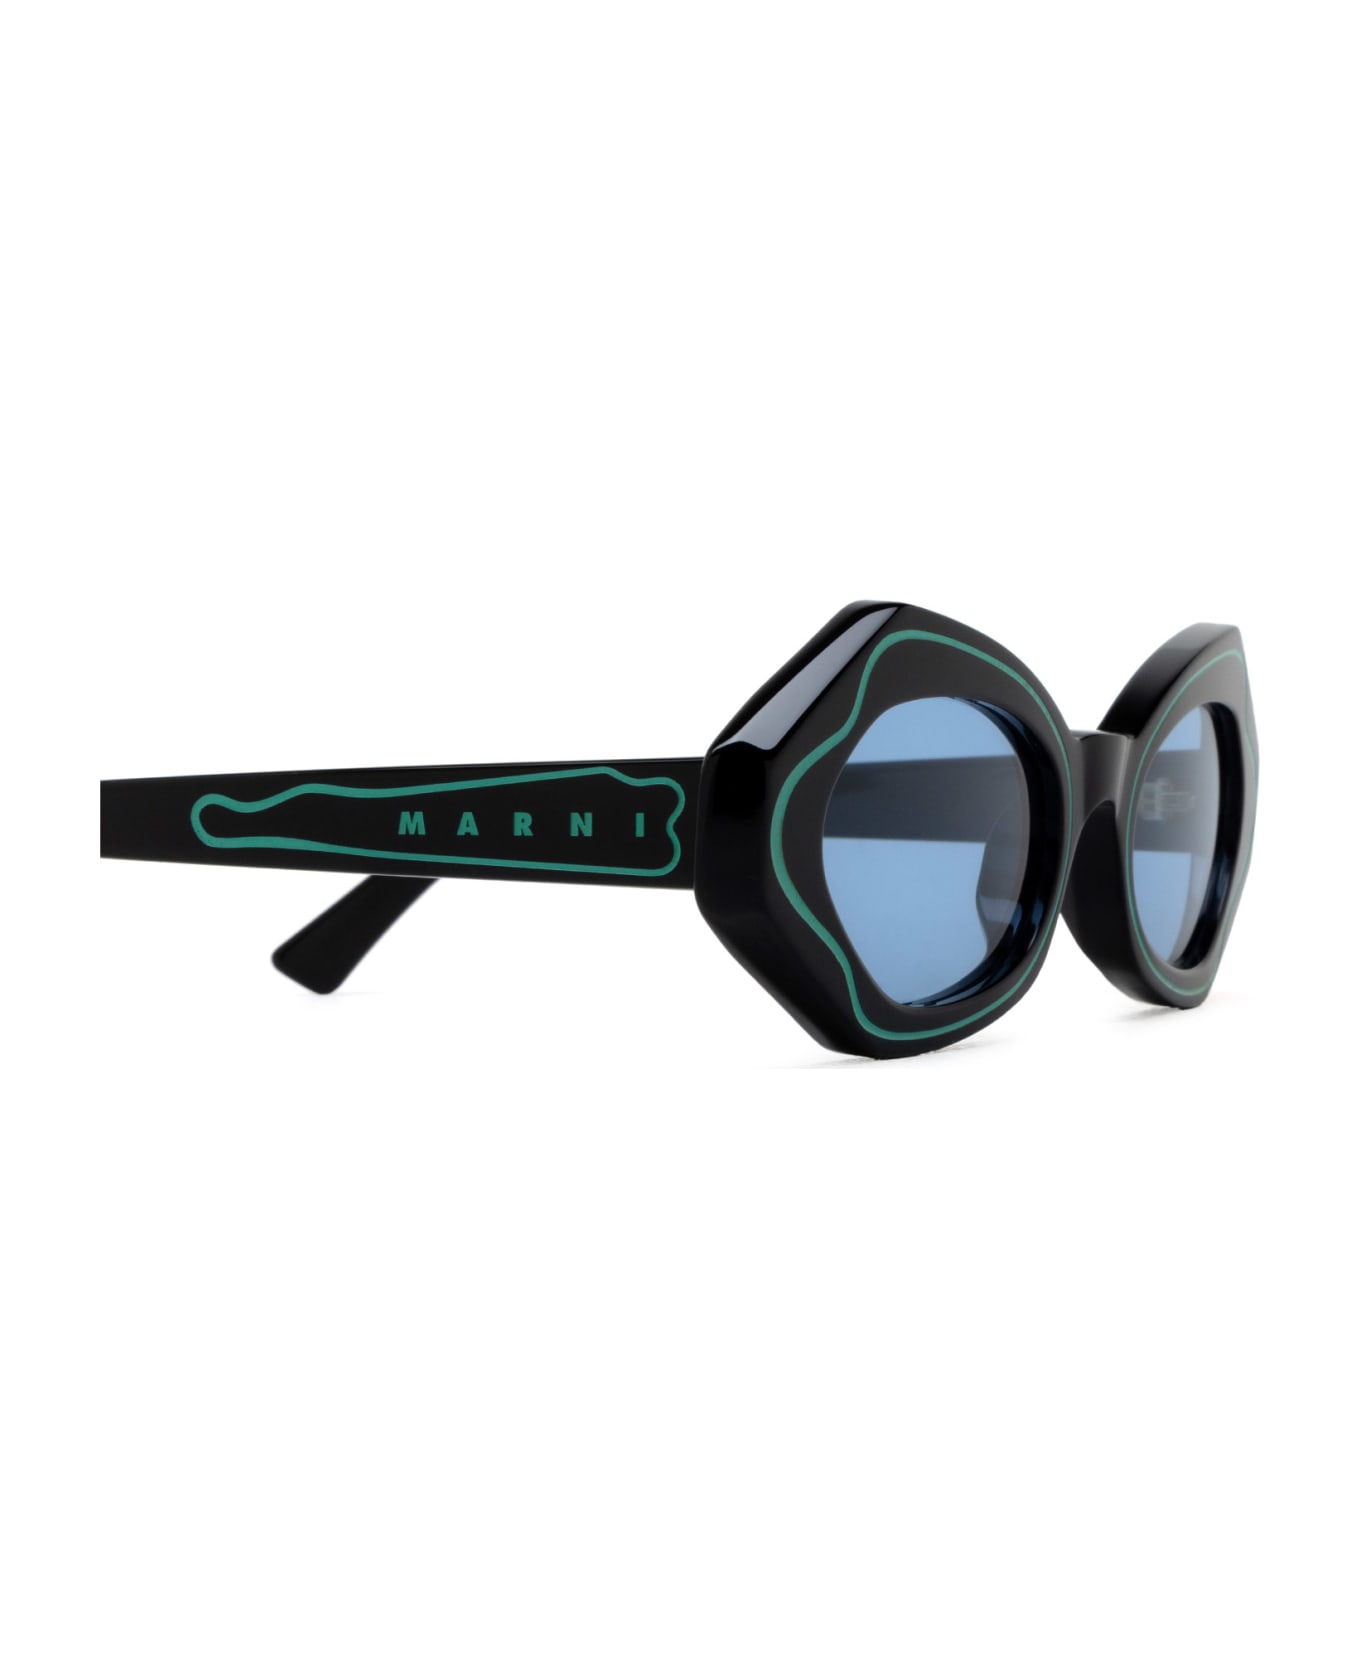 Marni Eyewear Unlahand Black / Green Sunglasses - Black / Green